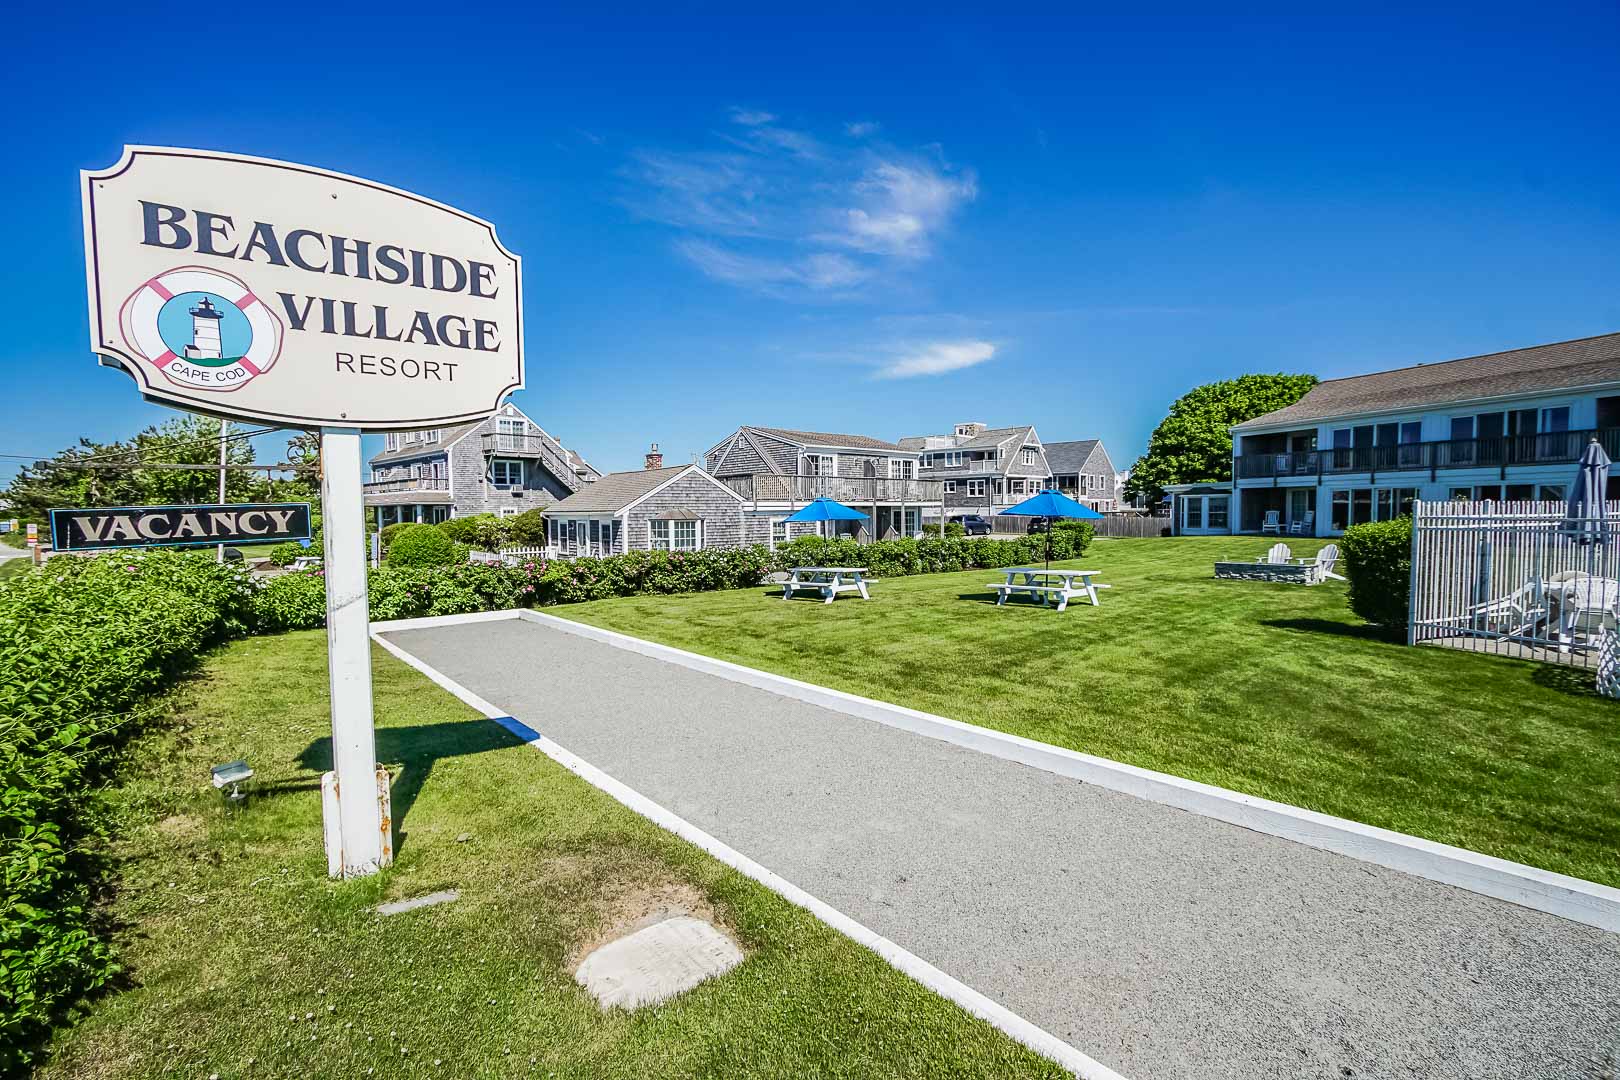 An inviting resort entrance at VRI's Beachside Village Resort in Massachusetts.